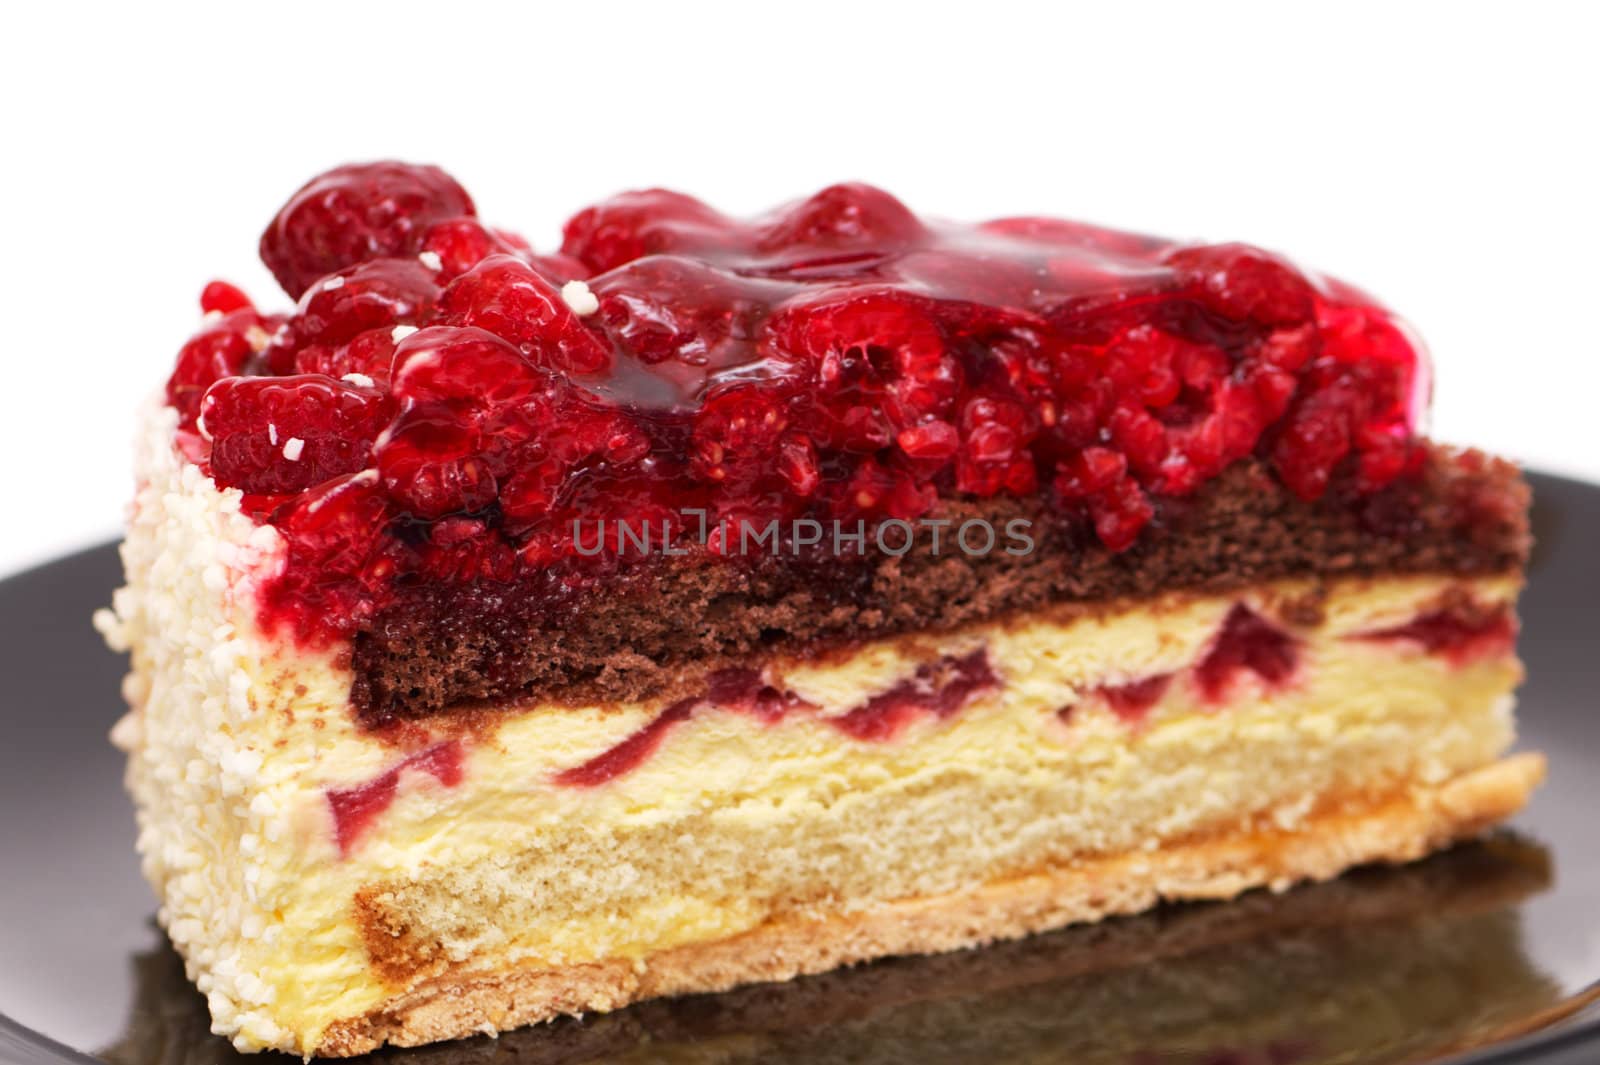 Raspberry cake close-up on a plate